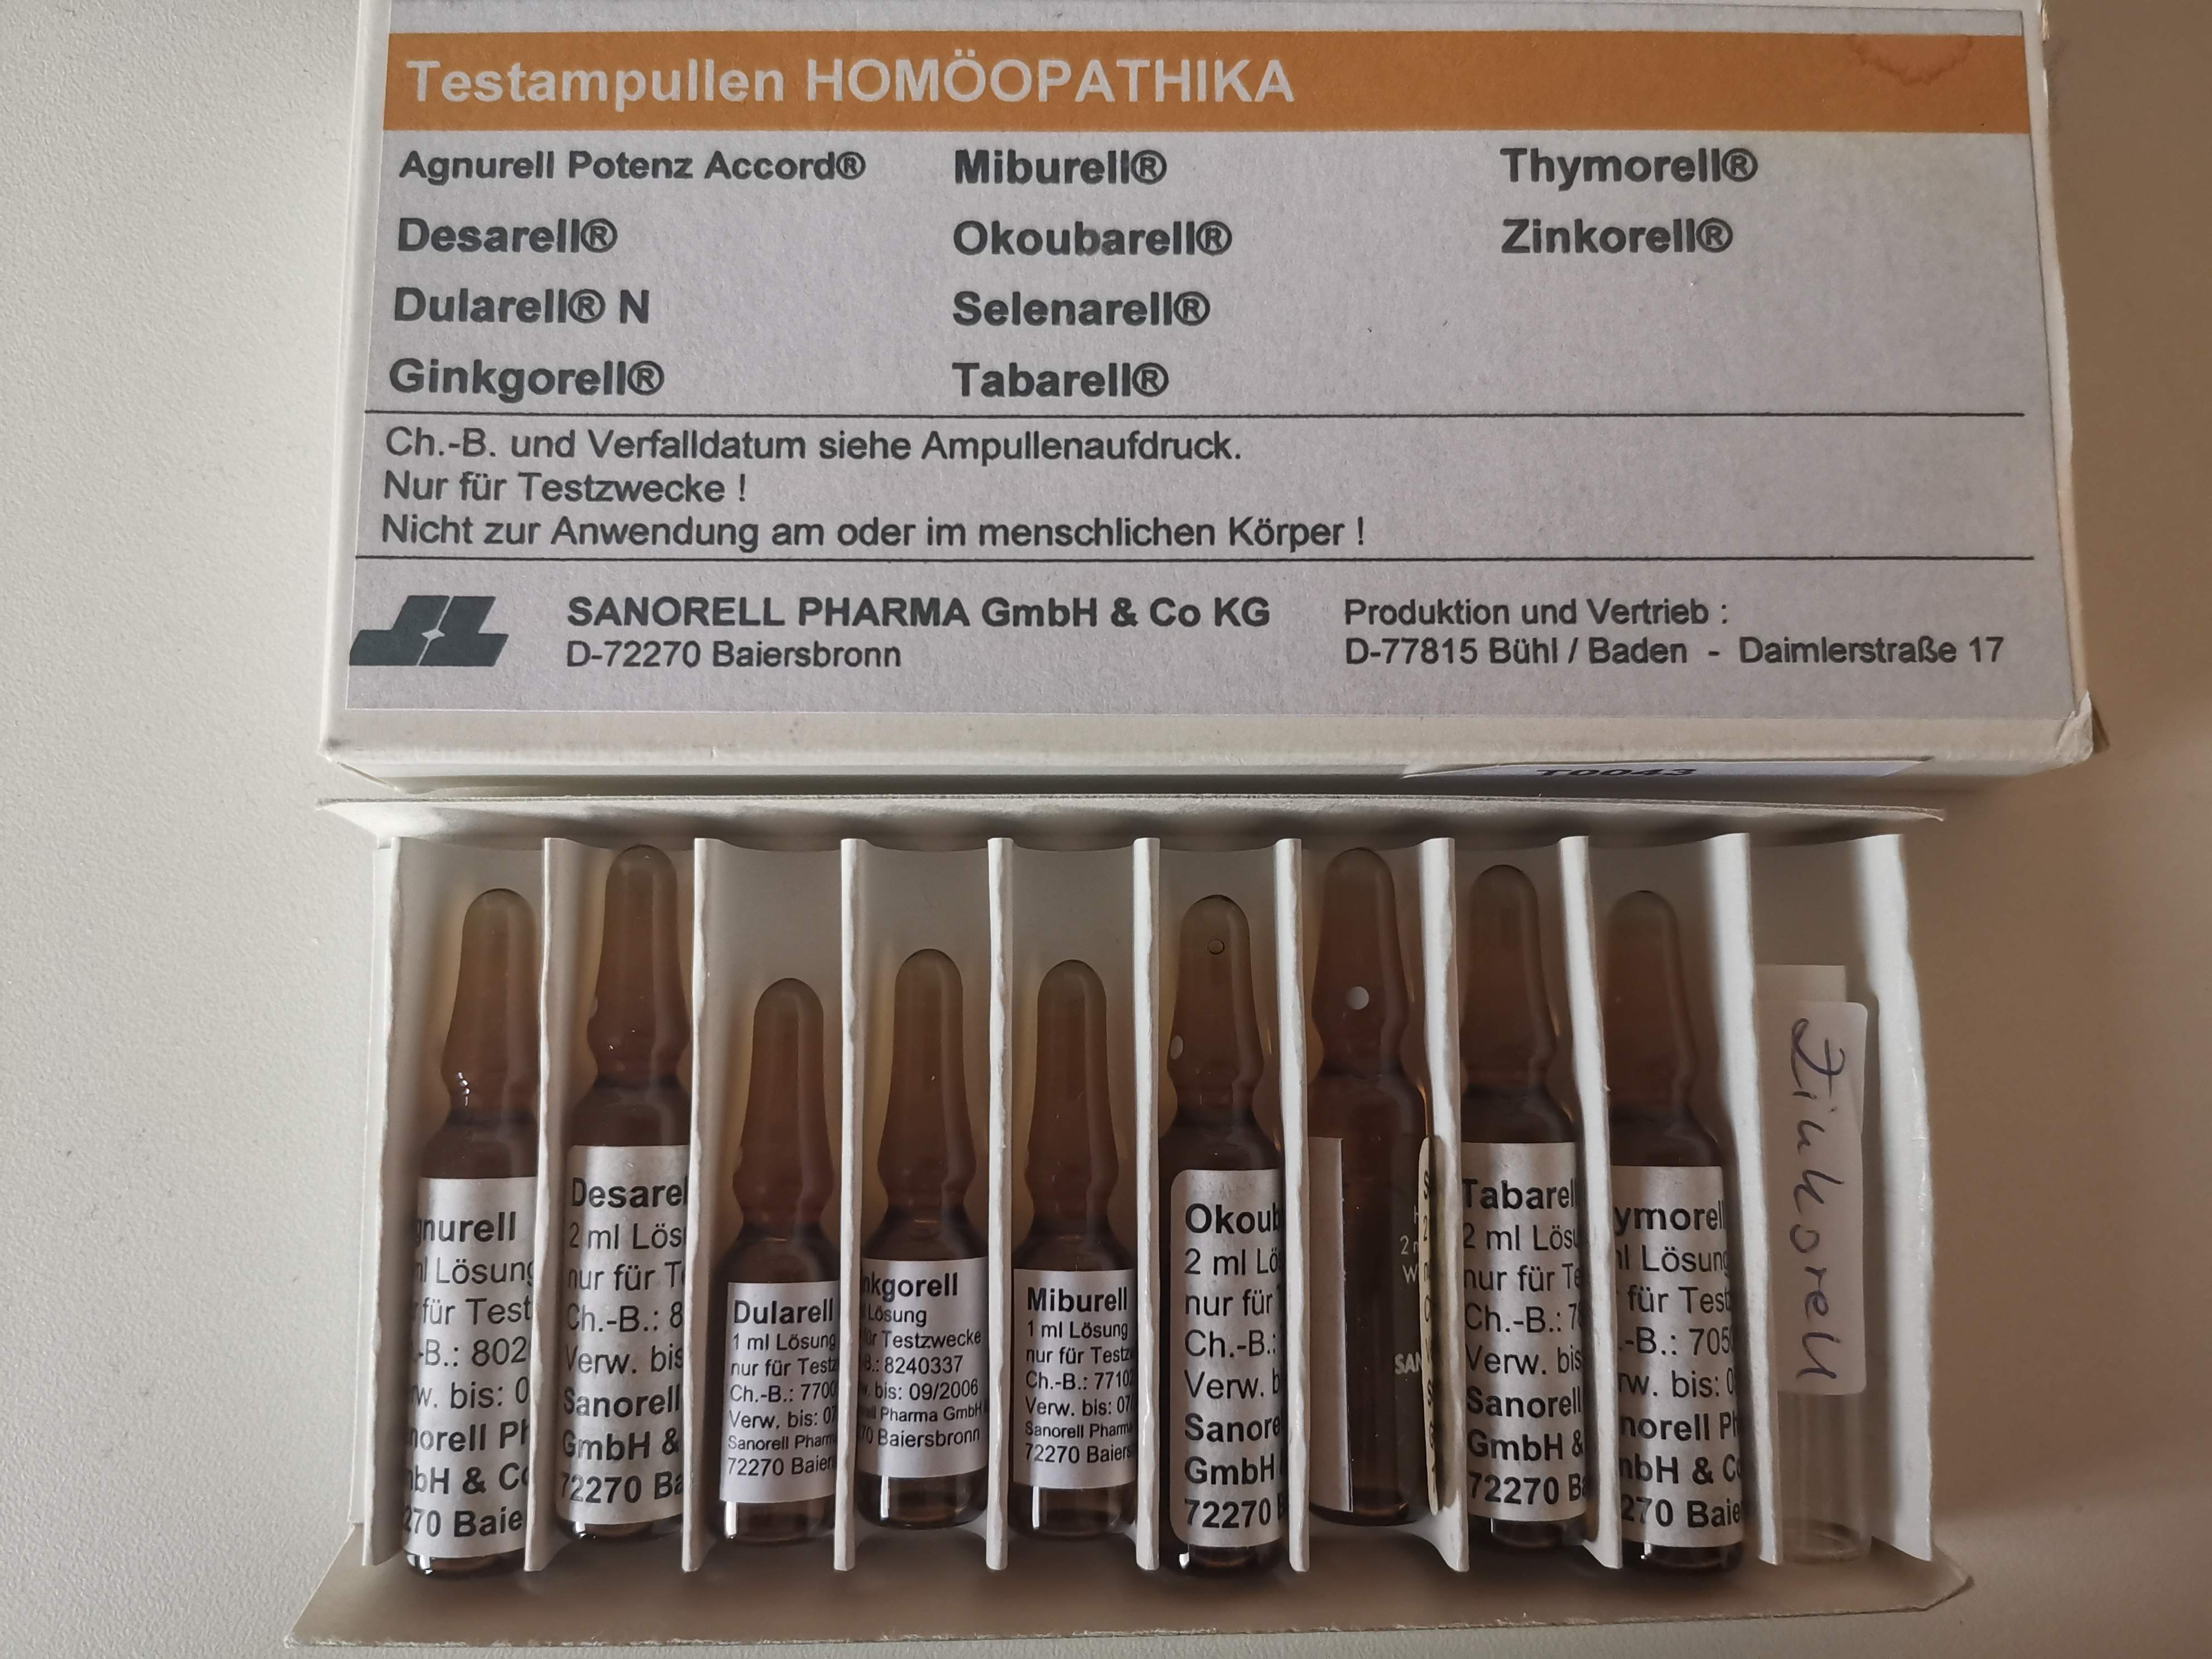 T0043 Sanorell Pharma Testampullen Homöopathika